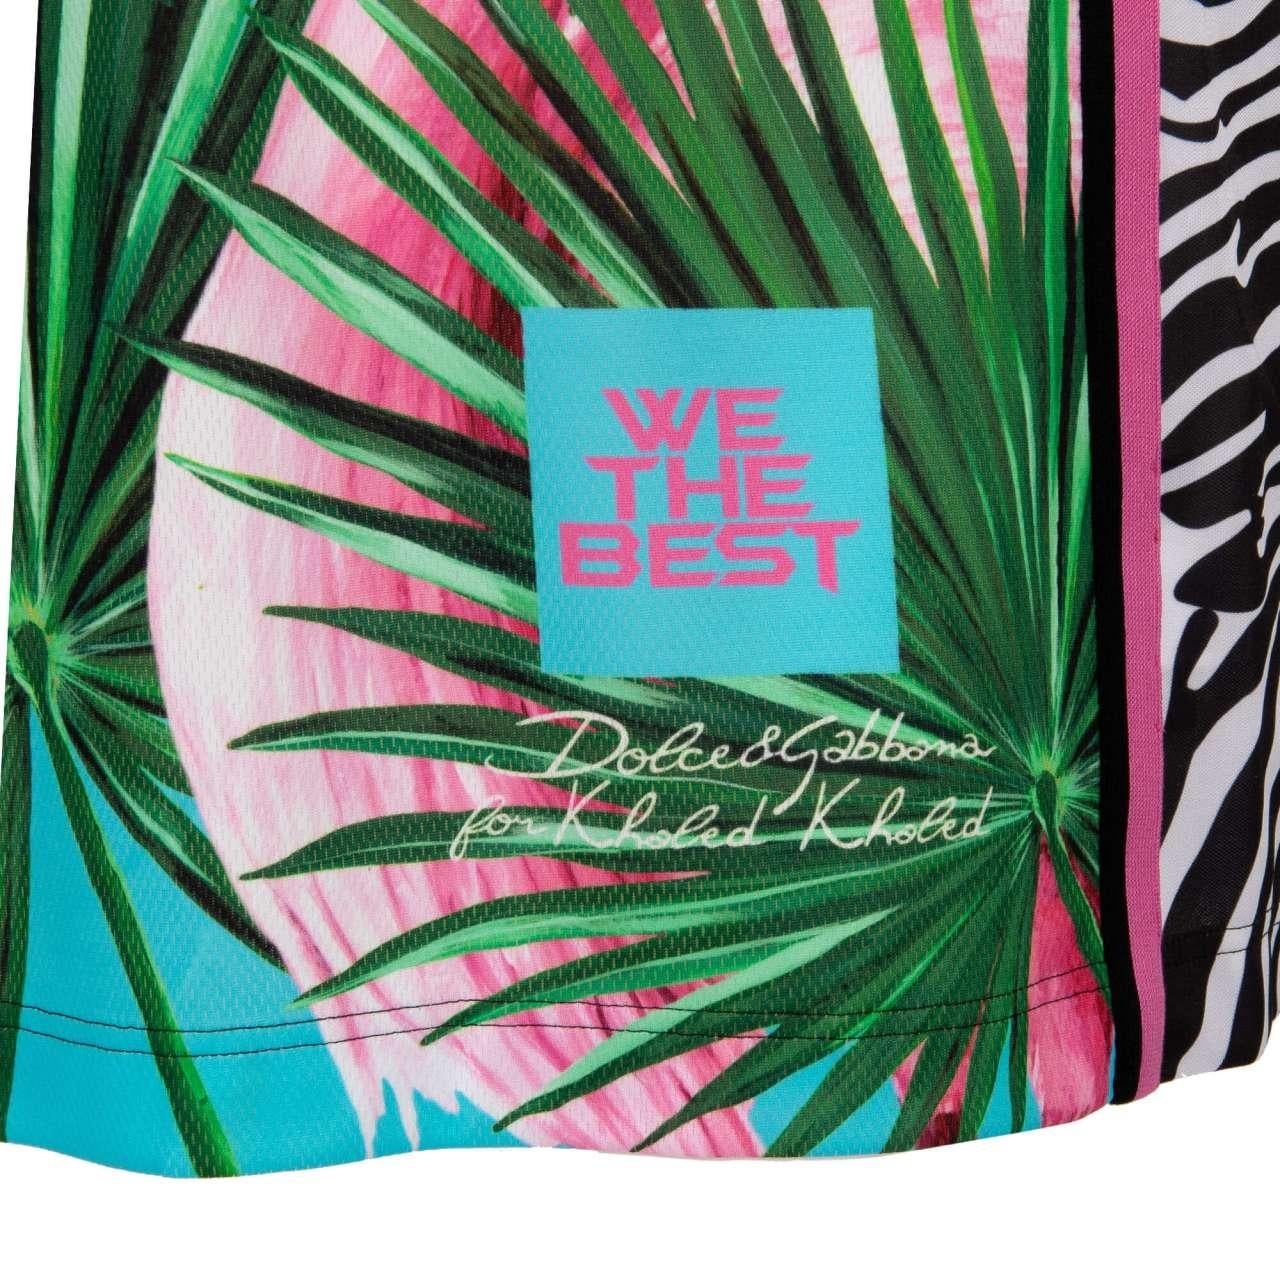 Men's D&G - DJ Khaled Oversize Rank Top with Flamingo Zebra Print Pink Blue 52 For Sale